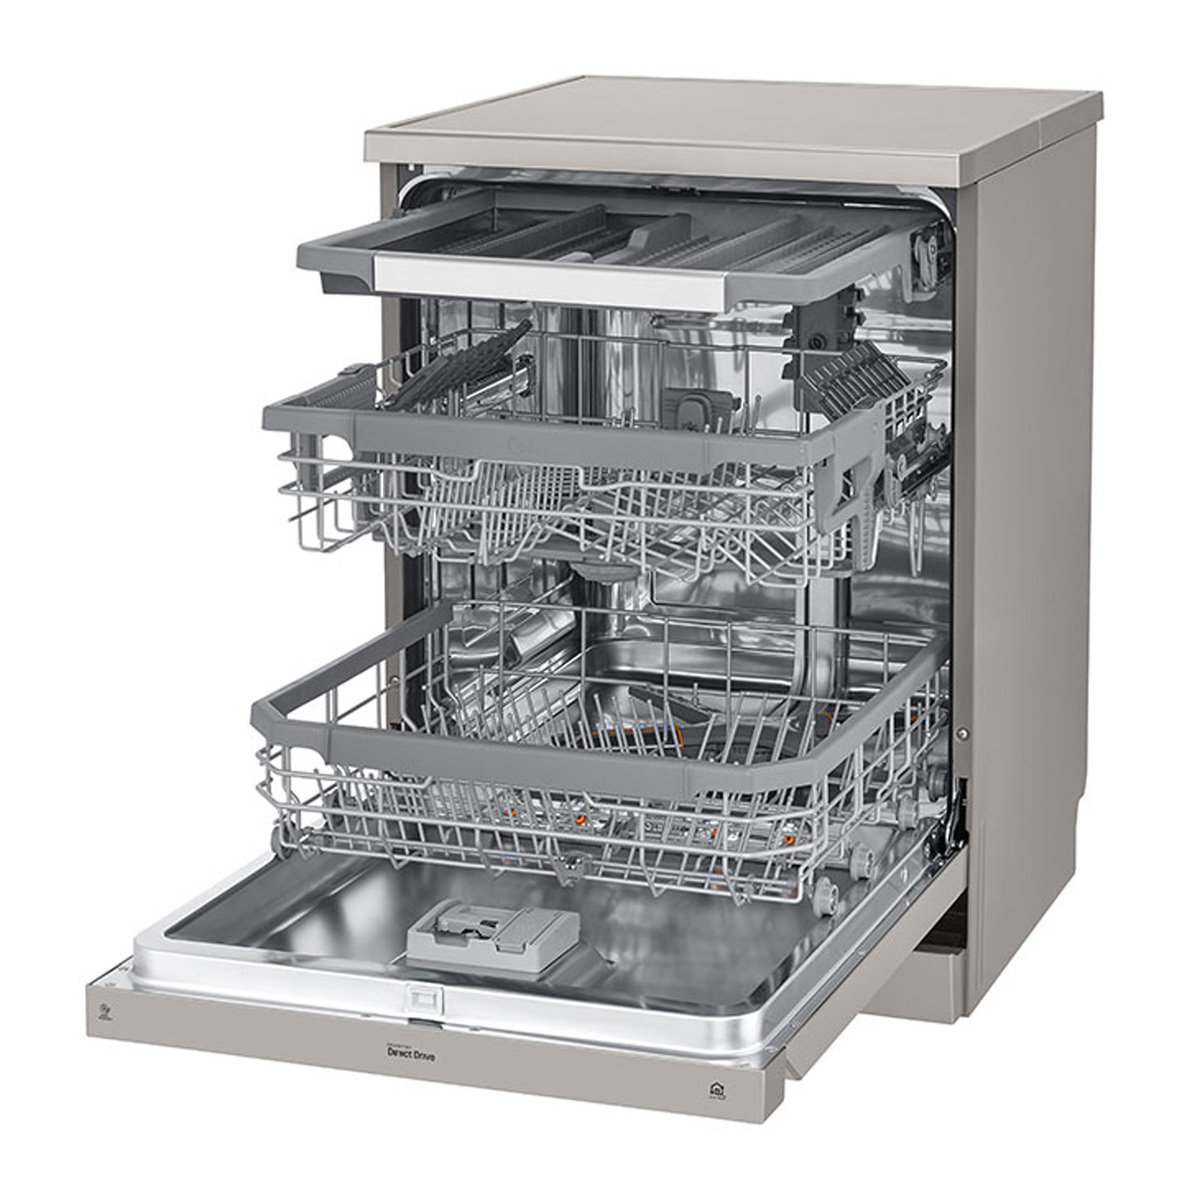 LG Dishwasher DFB425FP 5Programs